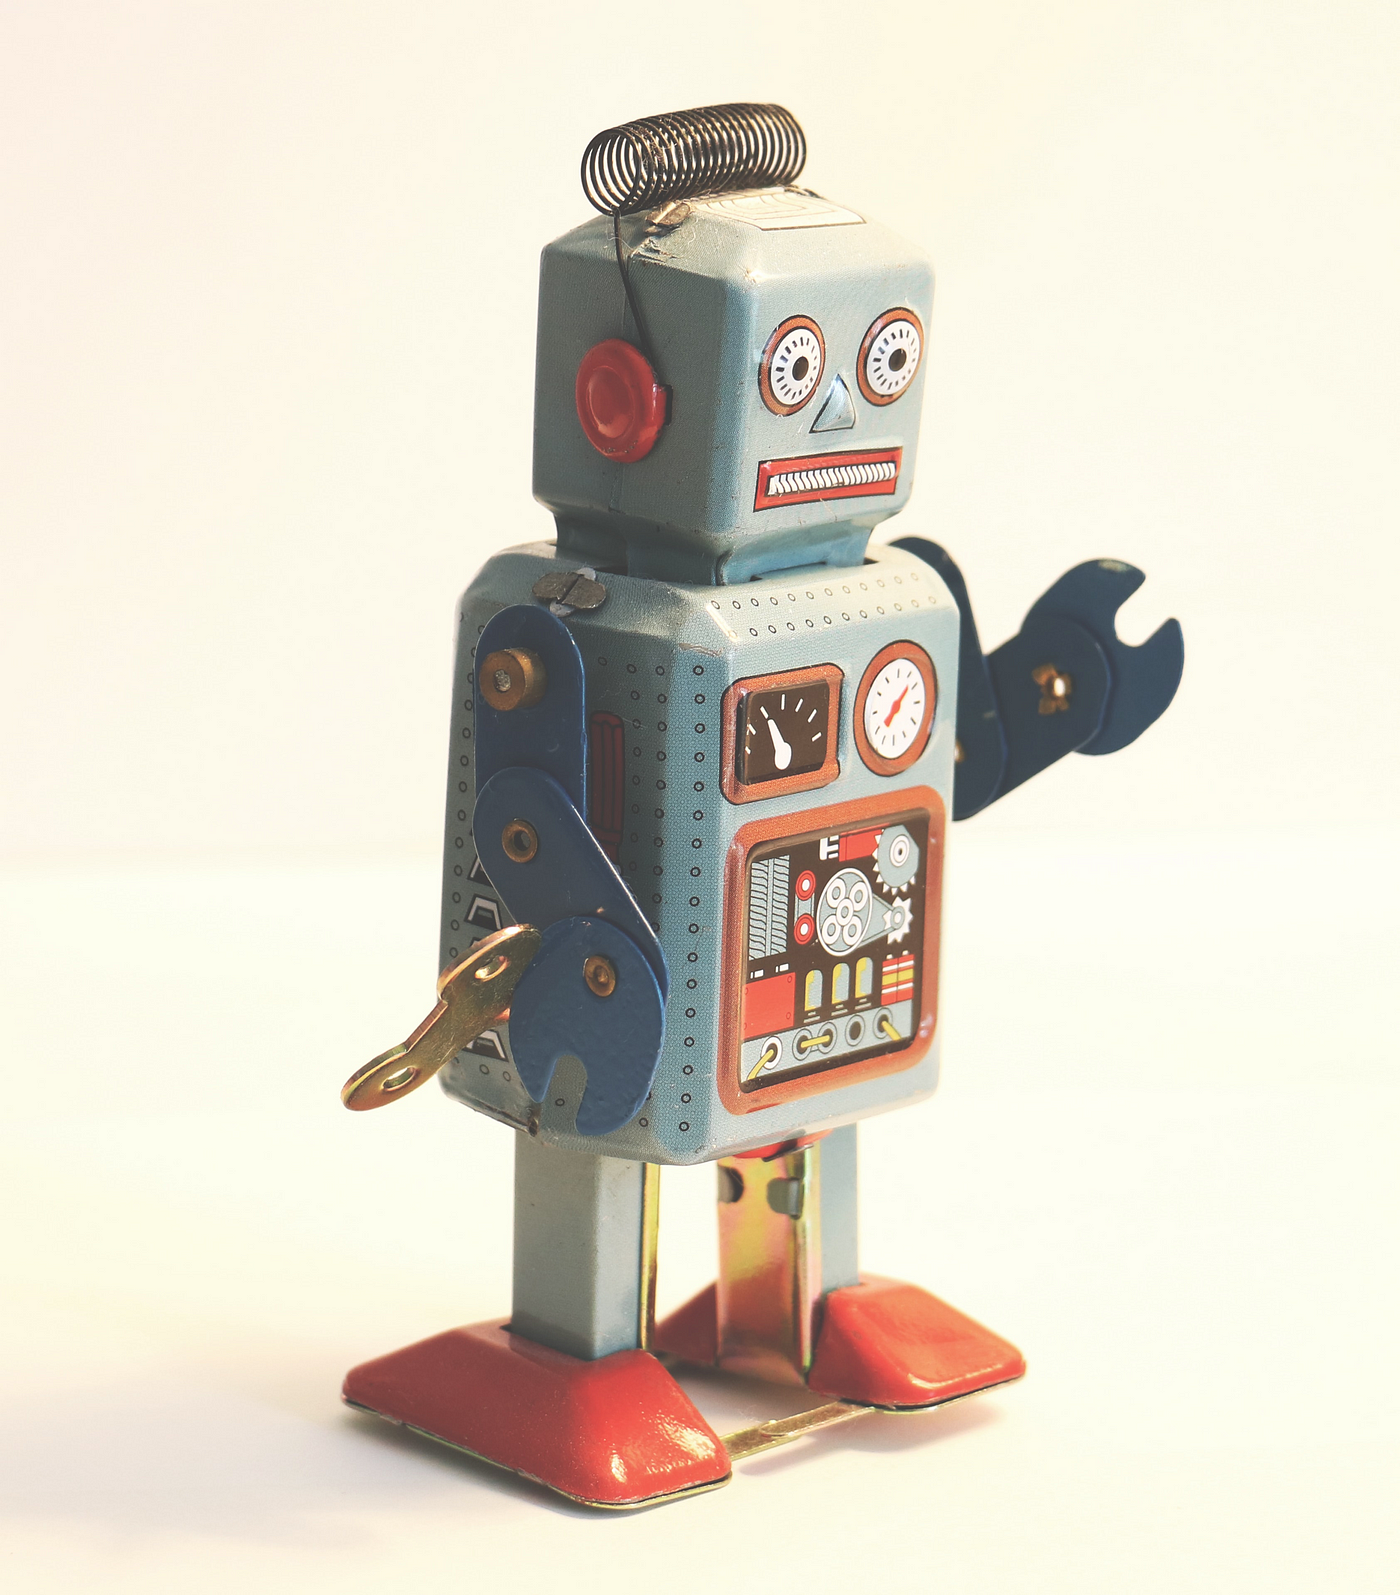 Antique toy robot waving arm